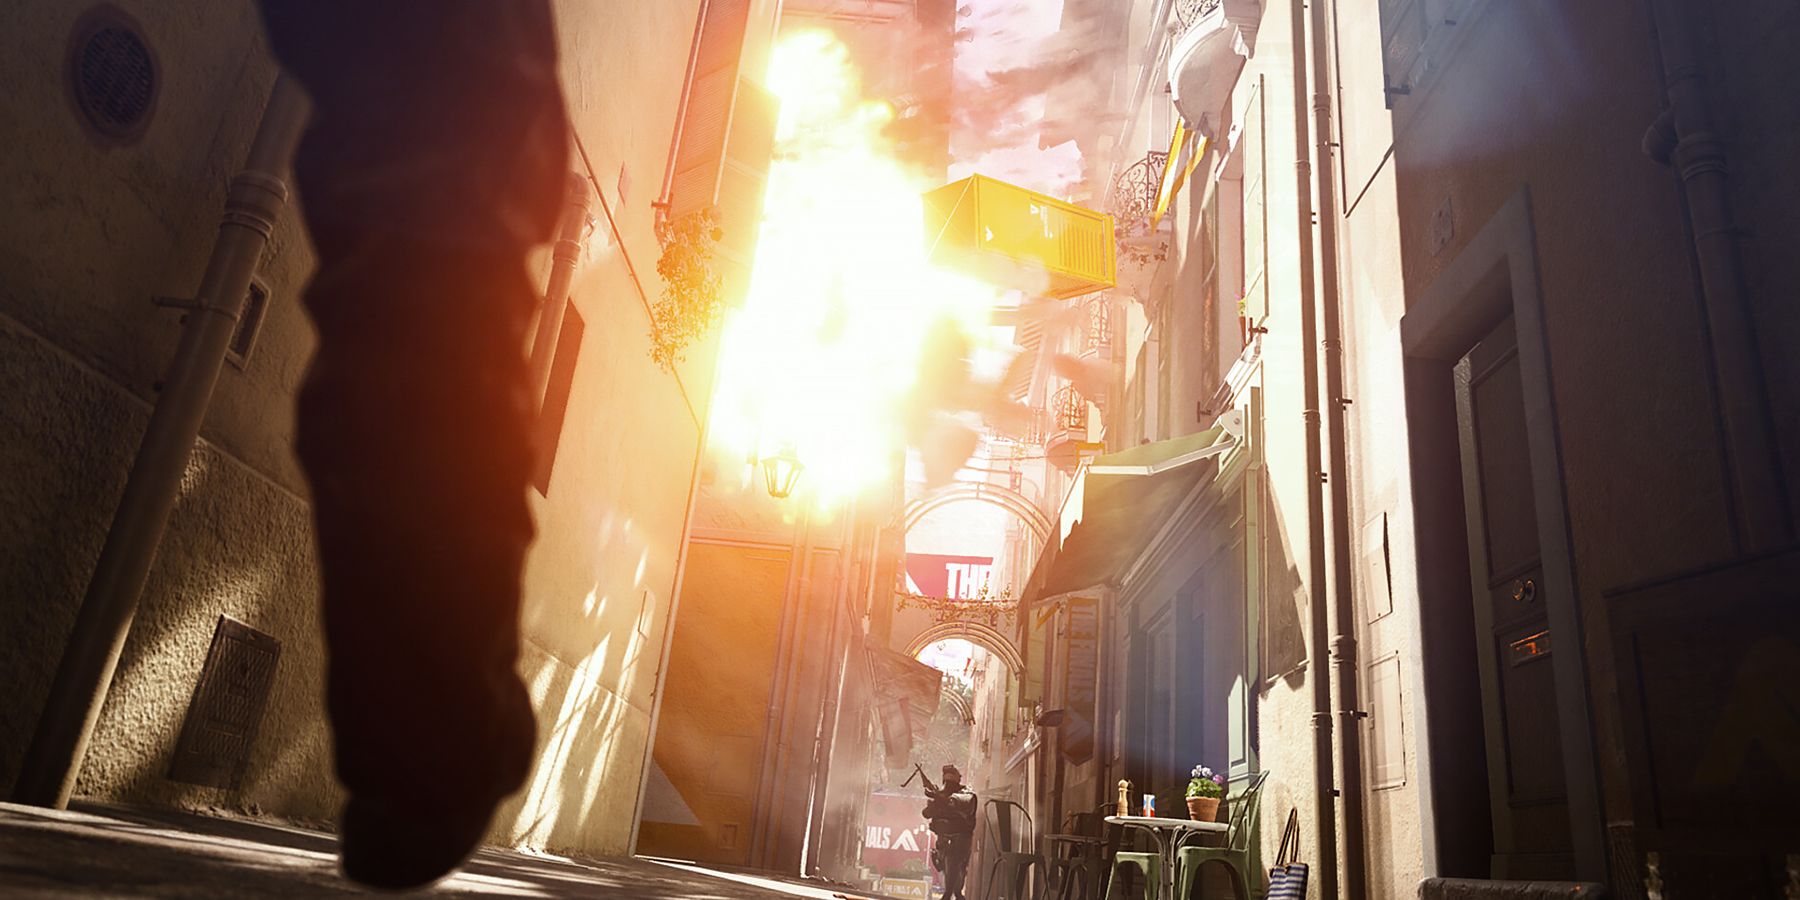 Embark Studios' The Finals screenshot of an explosion.